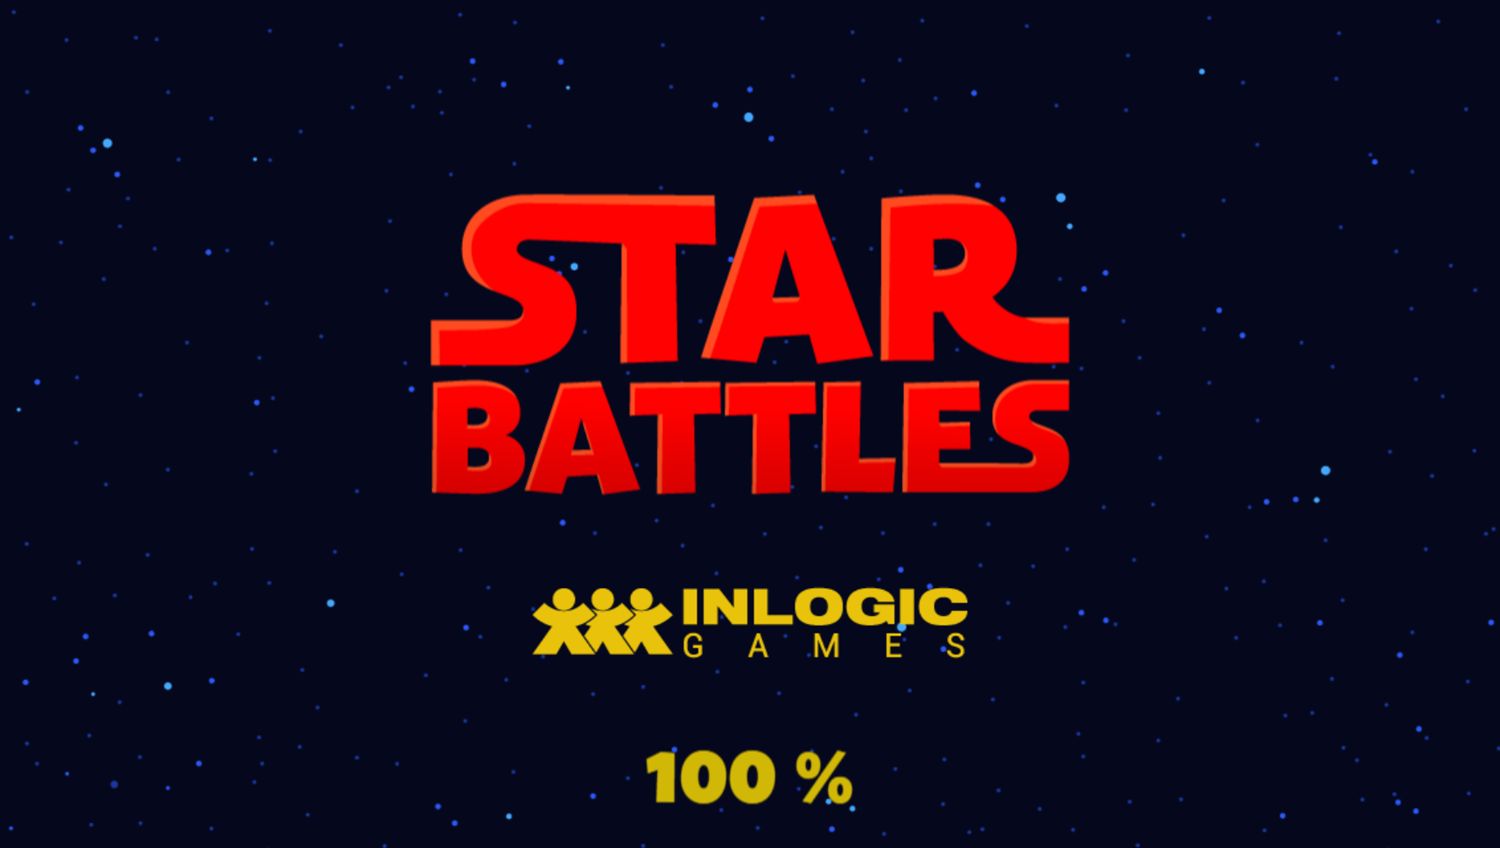 Star Battles Game Welcome Screen Screenshot.